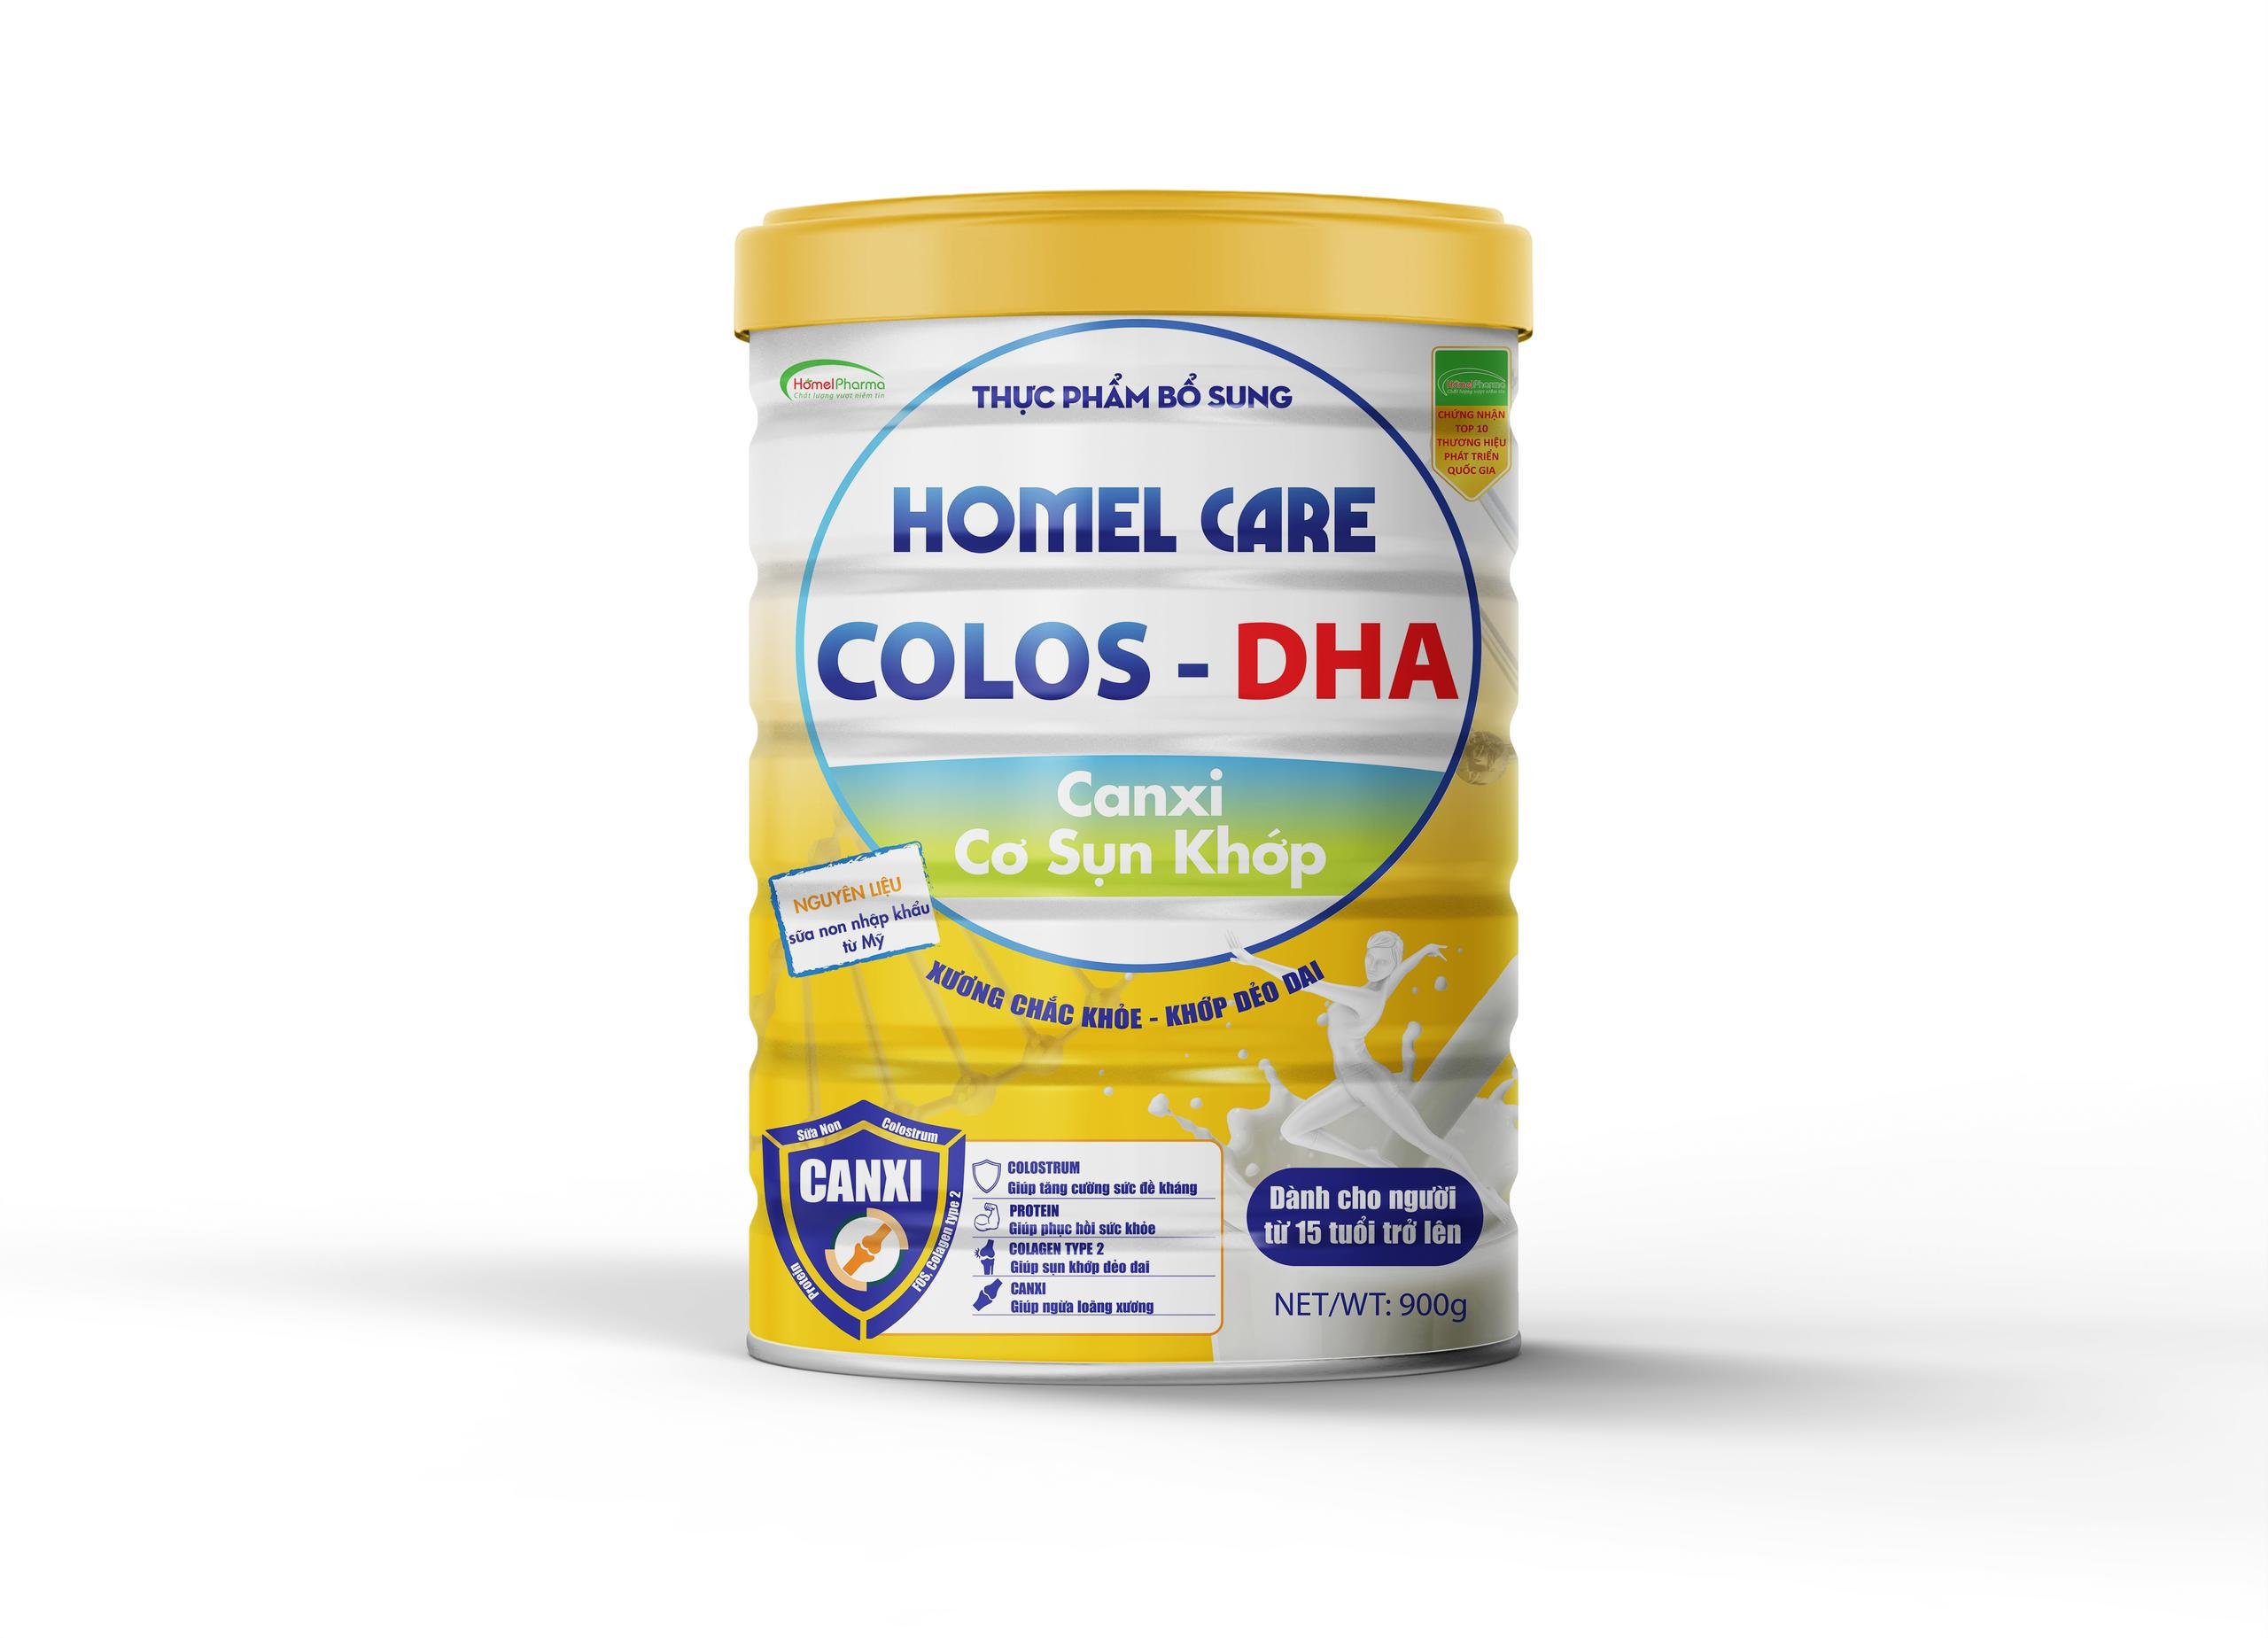 Homel Care Colos - DHA Canxi Cơ Sụn Khớp